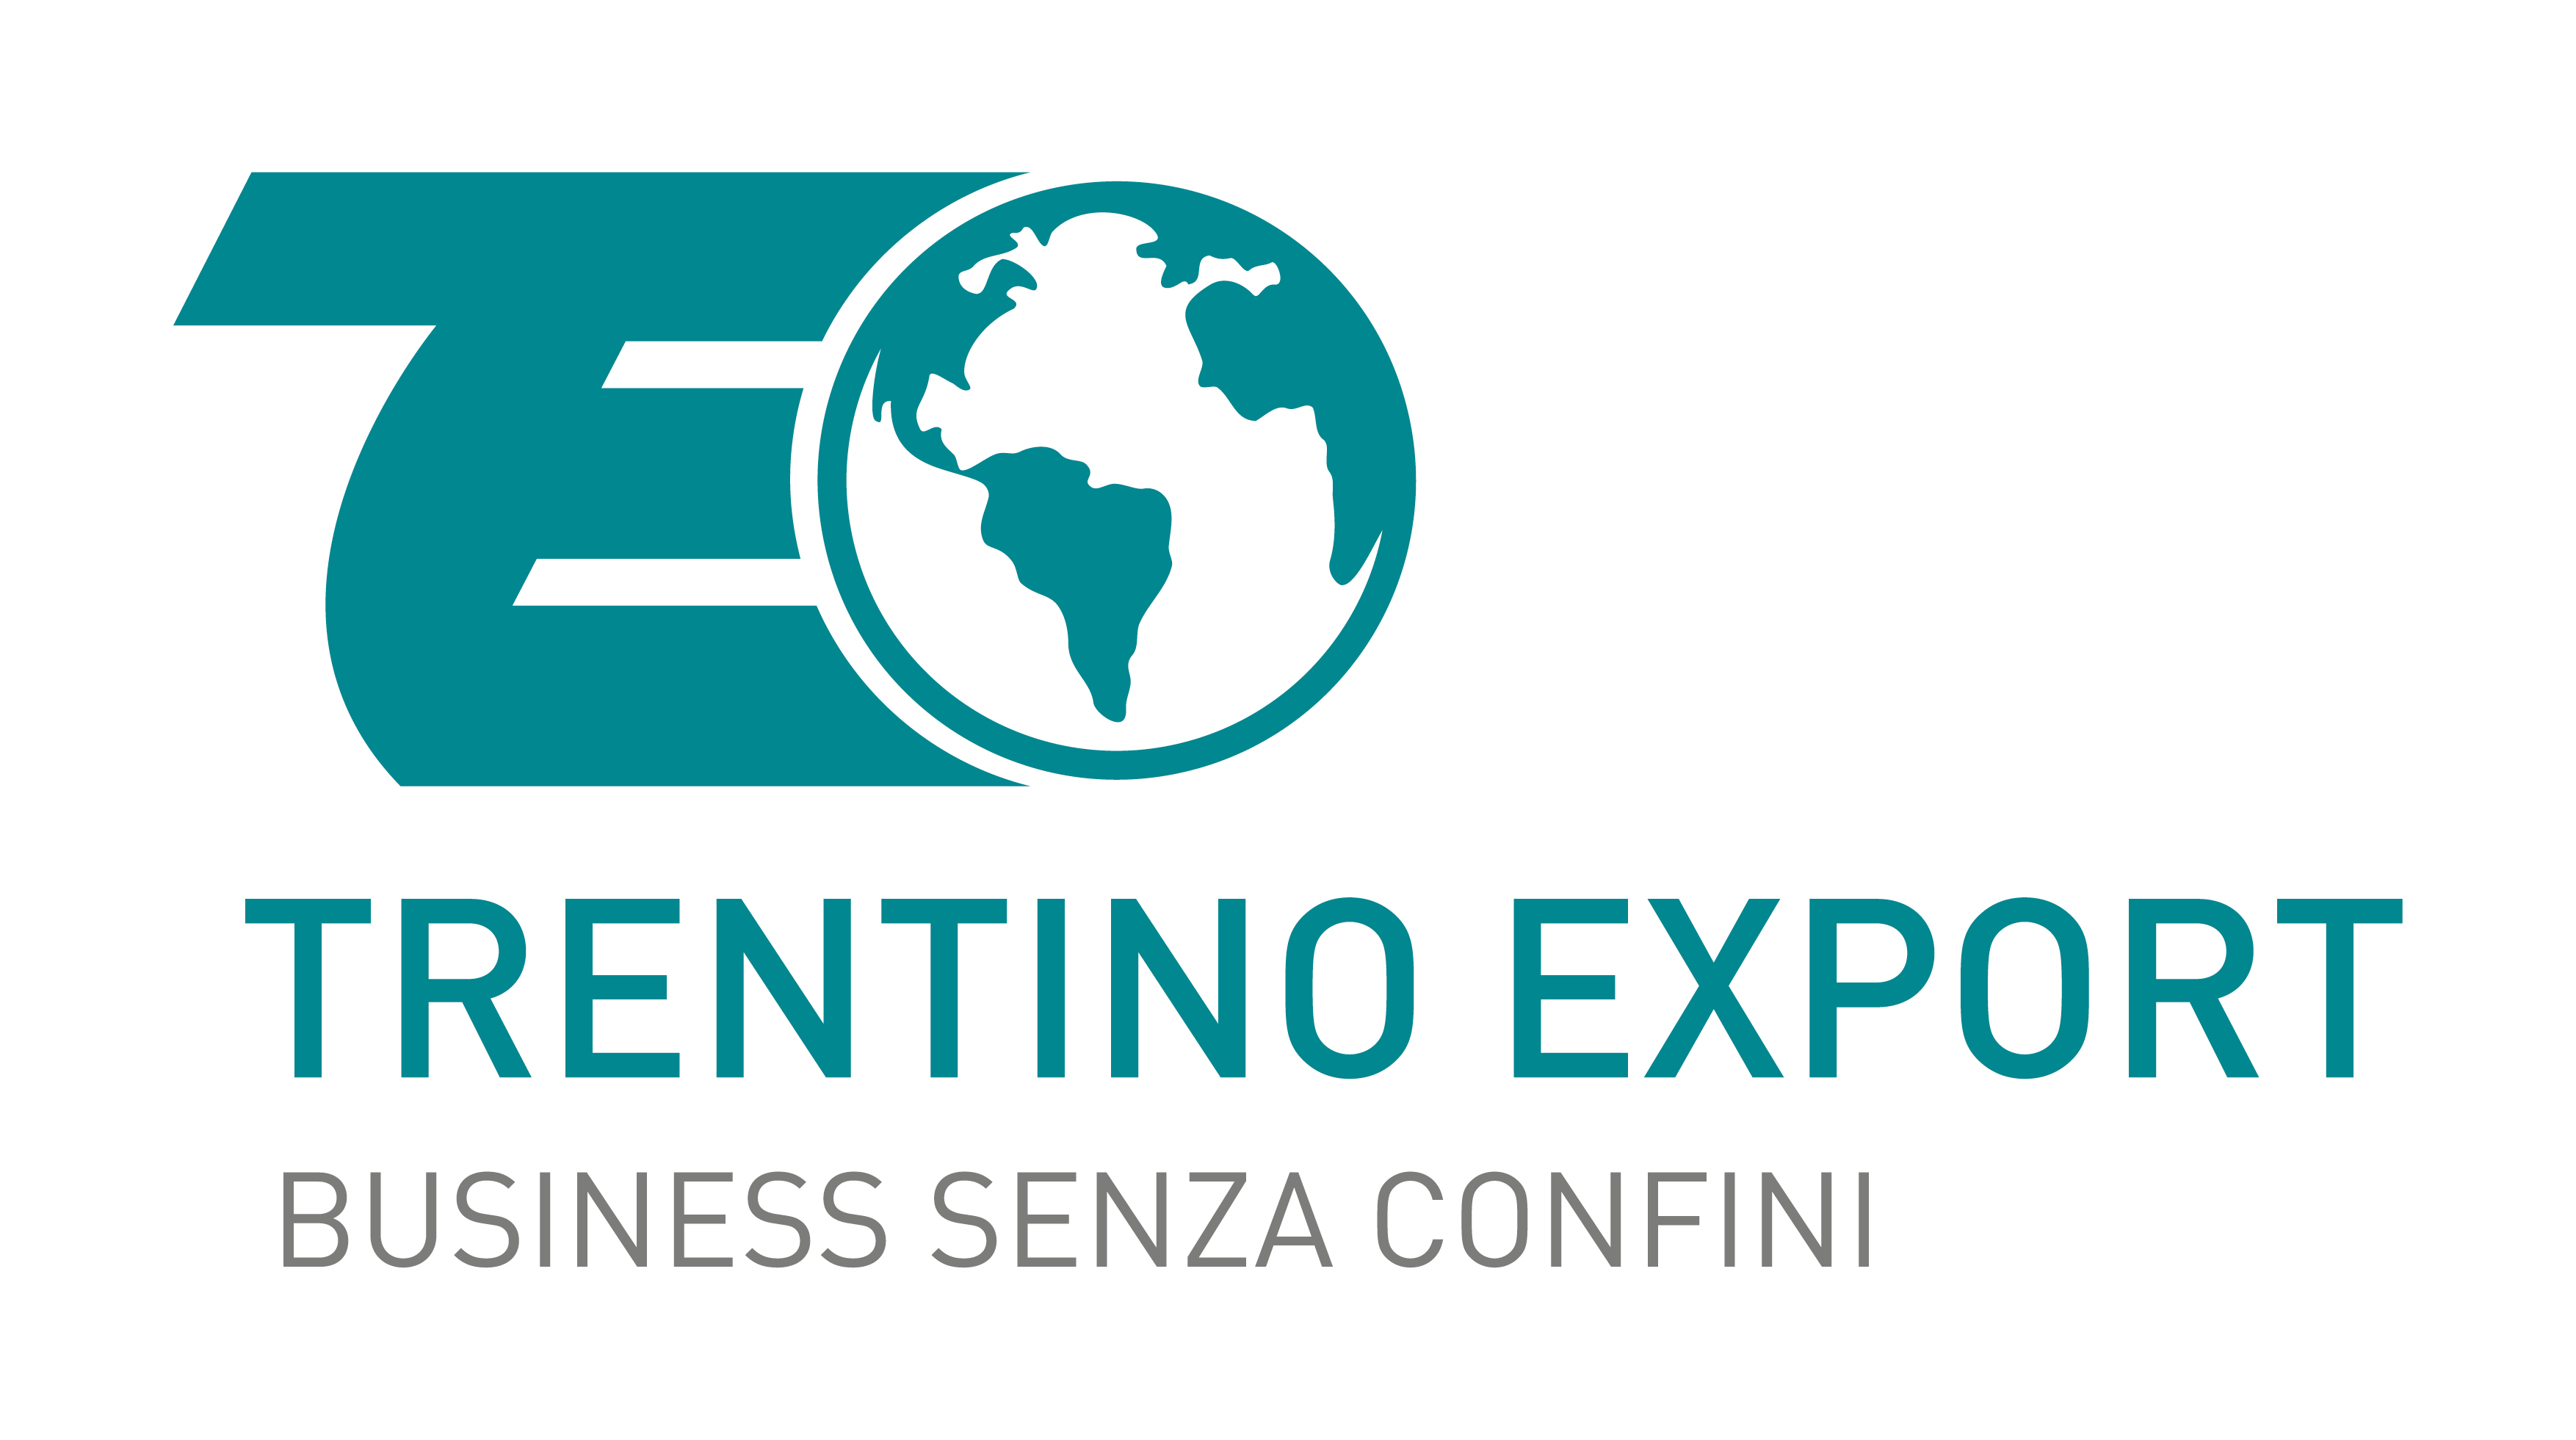 Trentino Export logo